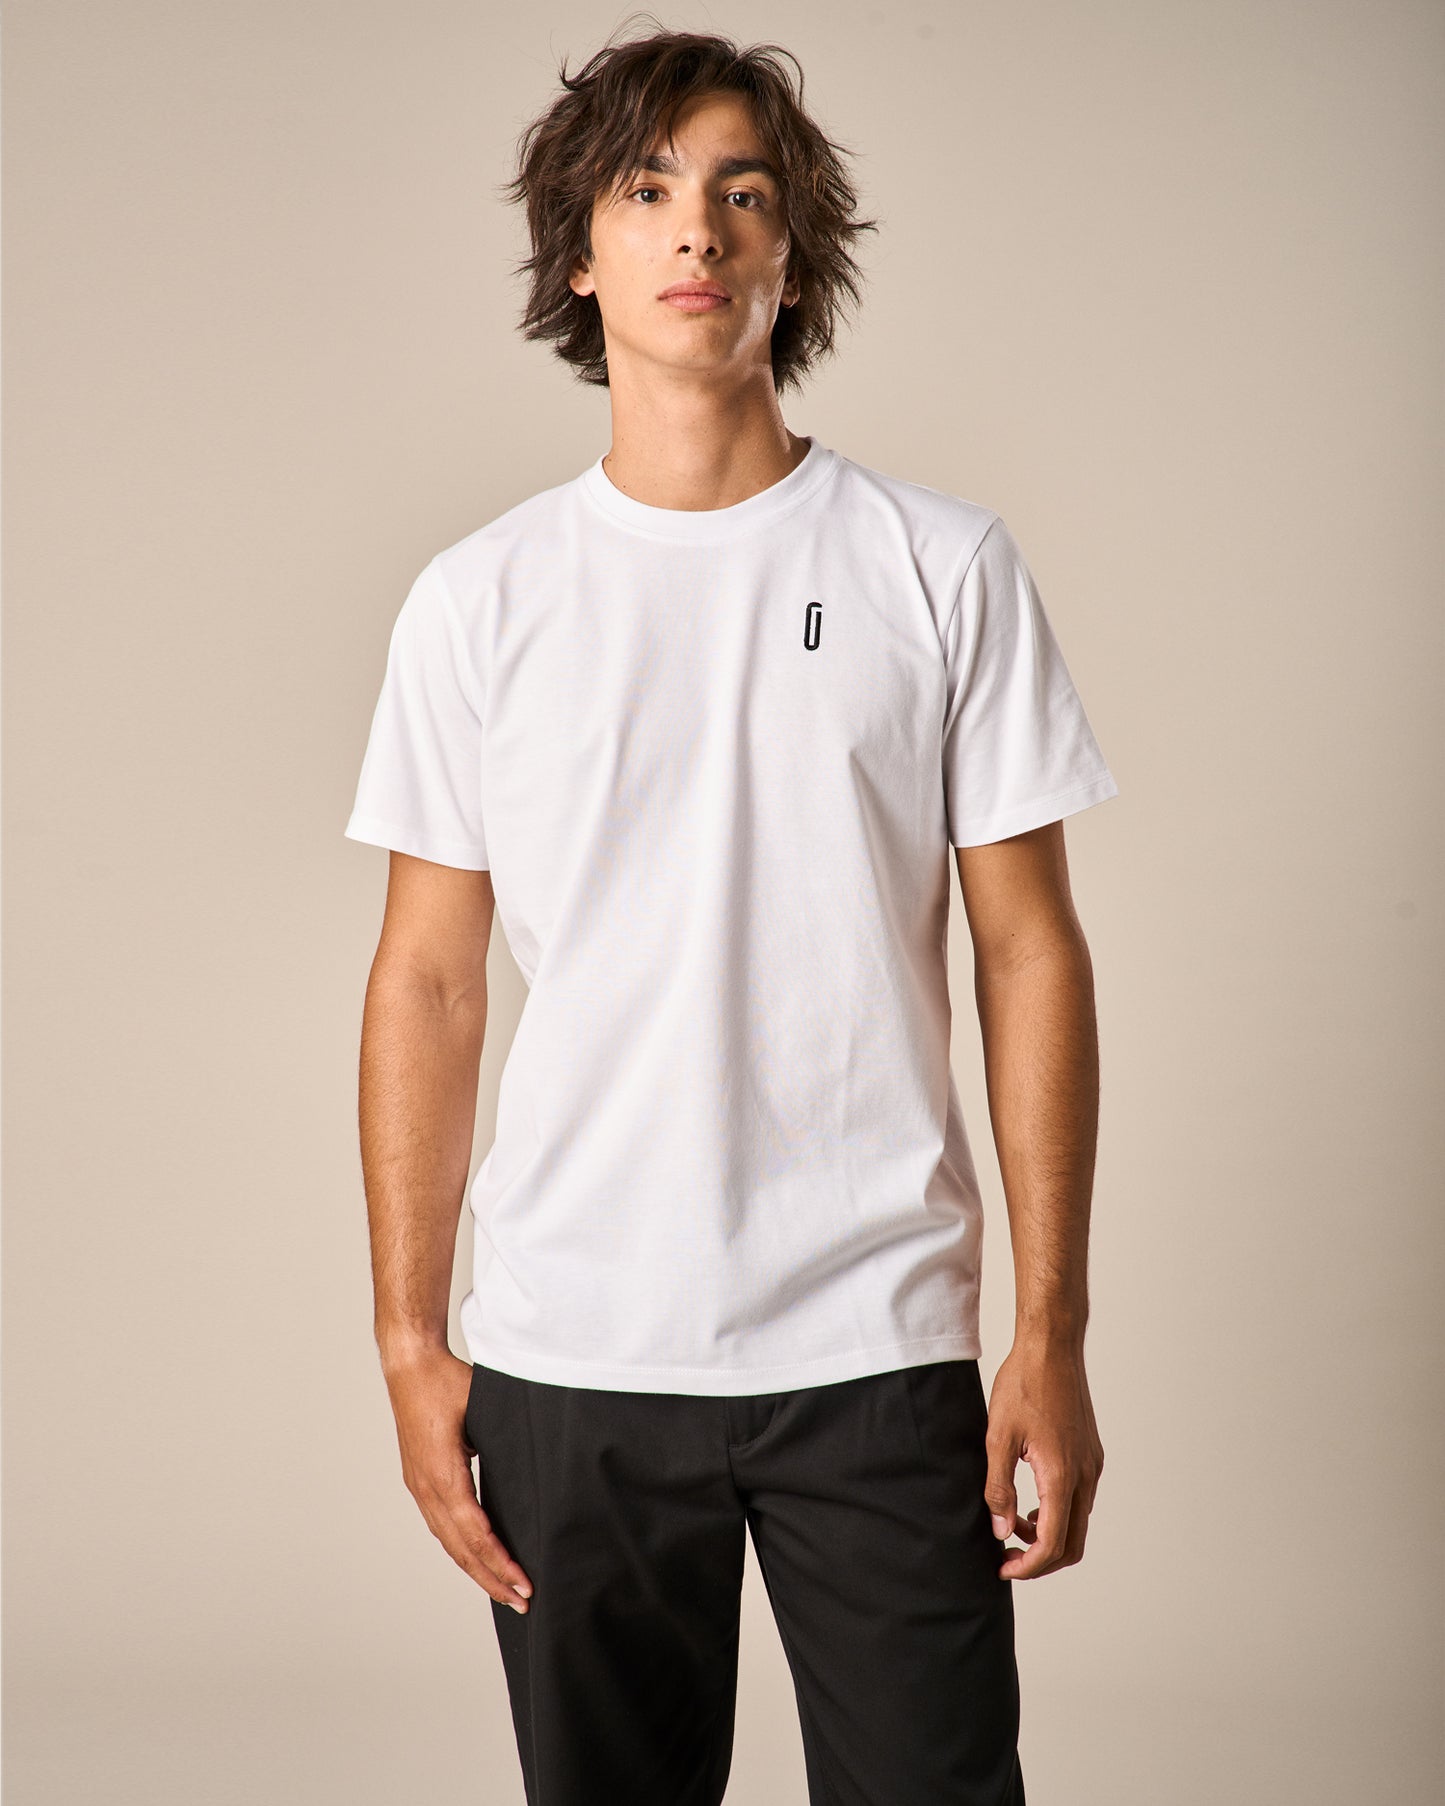 Camiseta blanca Portero